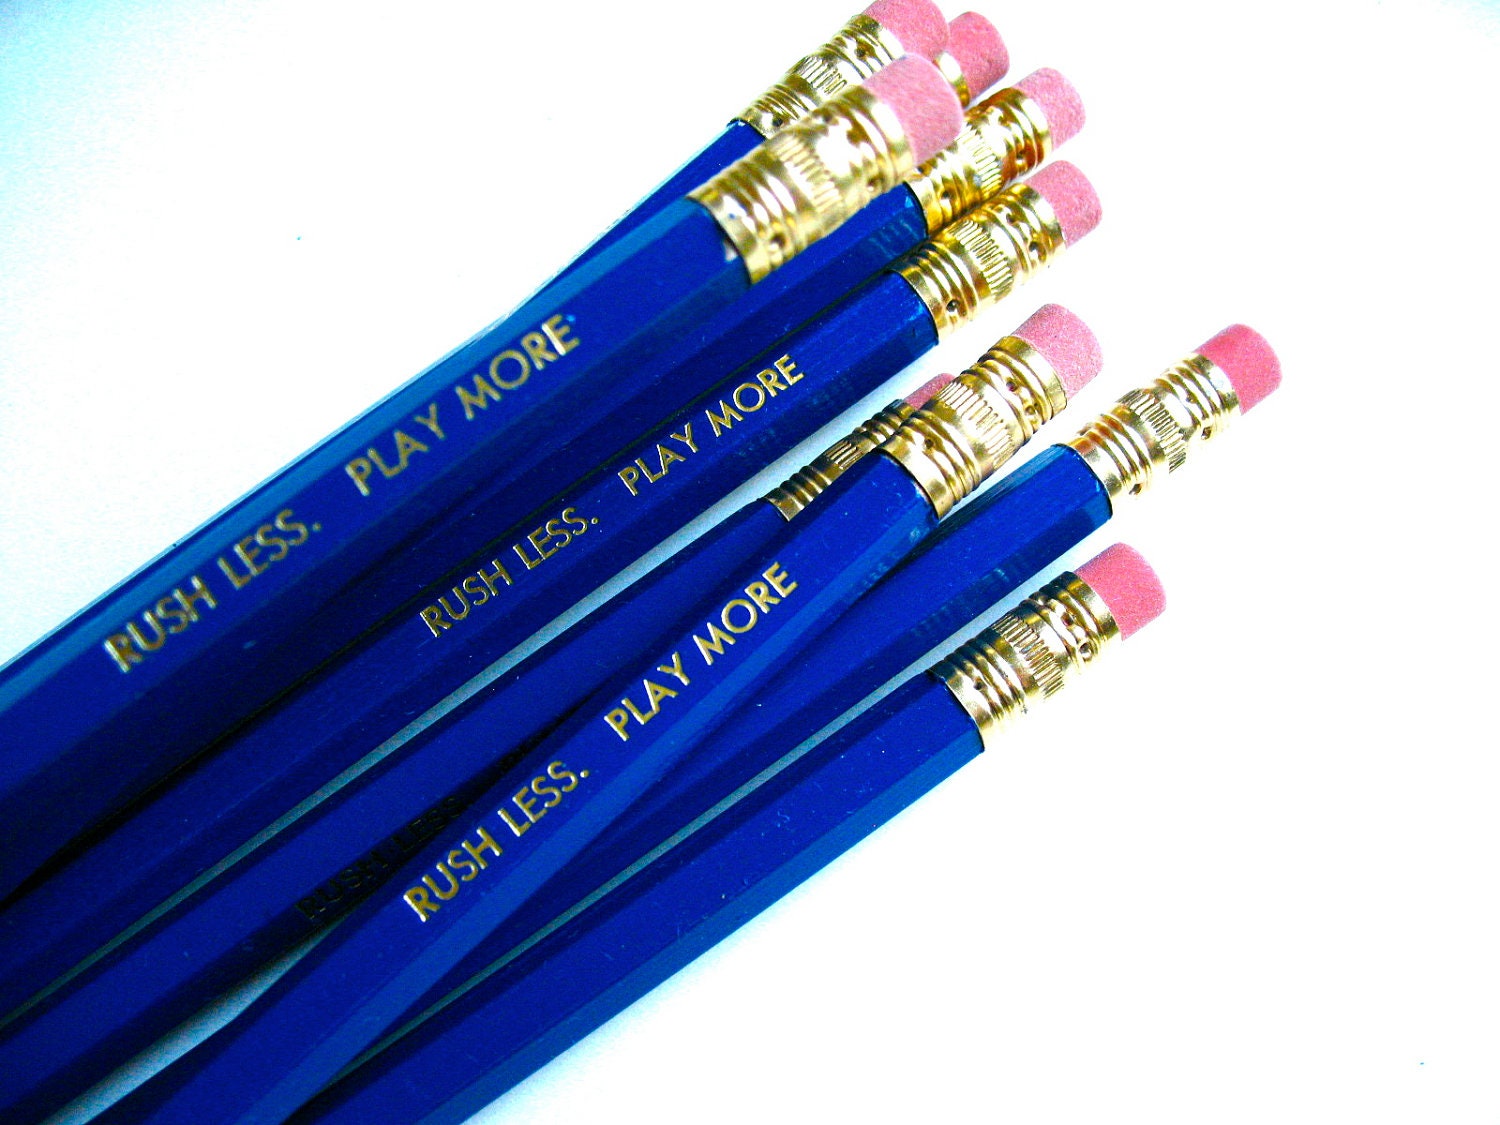 6 PENCILS - rush less play more - cobalt blue GRAPHITE HEX pencil set w/ kraft pencil case - Graduation gift - thebigharumph